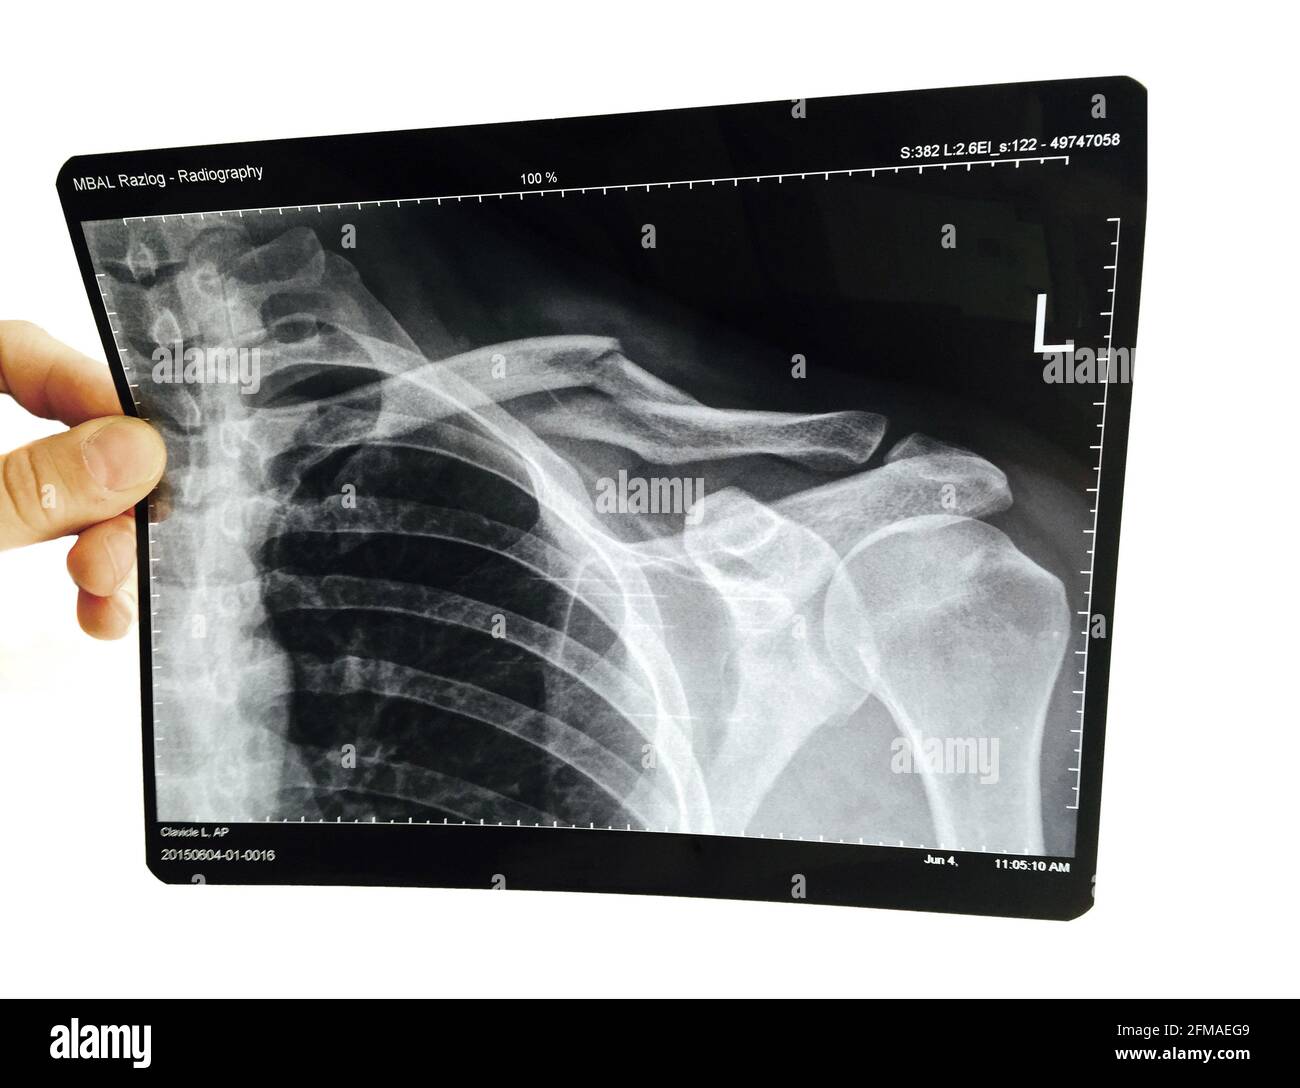 Broken left collarbone. Clavicle fracture. Hospital Xray. model & property released. Stock Photo